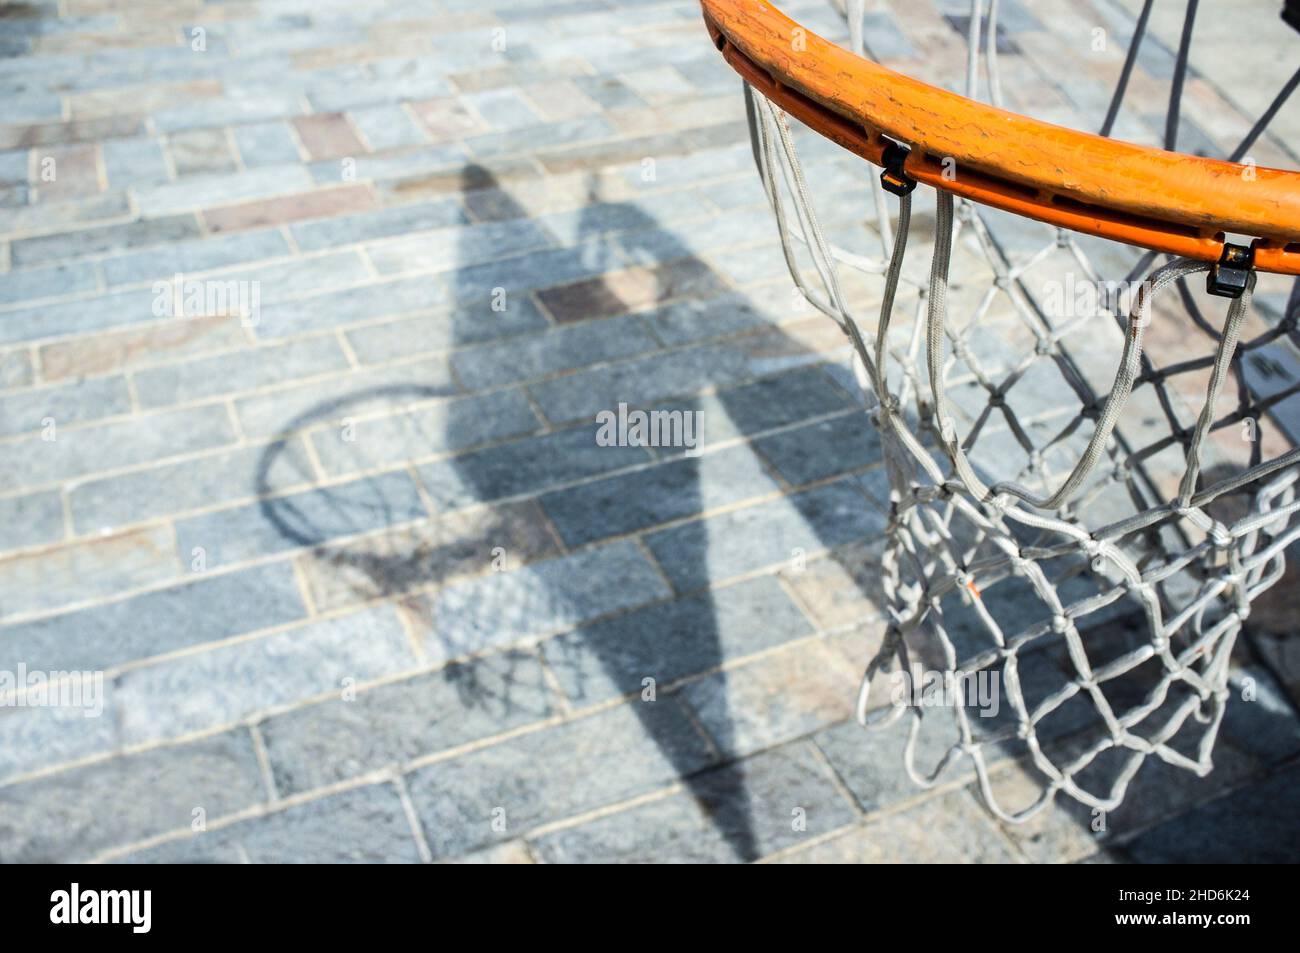 Un panier de basket-ball proyecting Shadow over cobble Stone Road surface.Gros plan. Banque D'Images